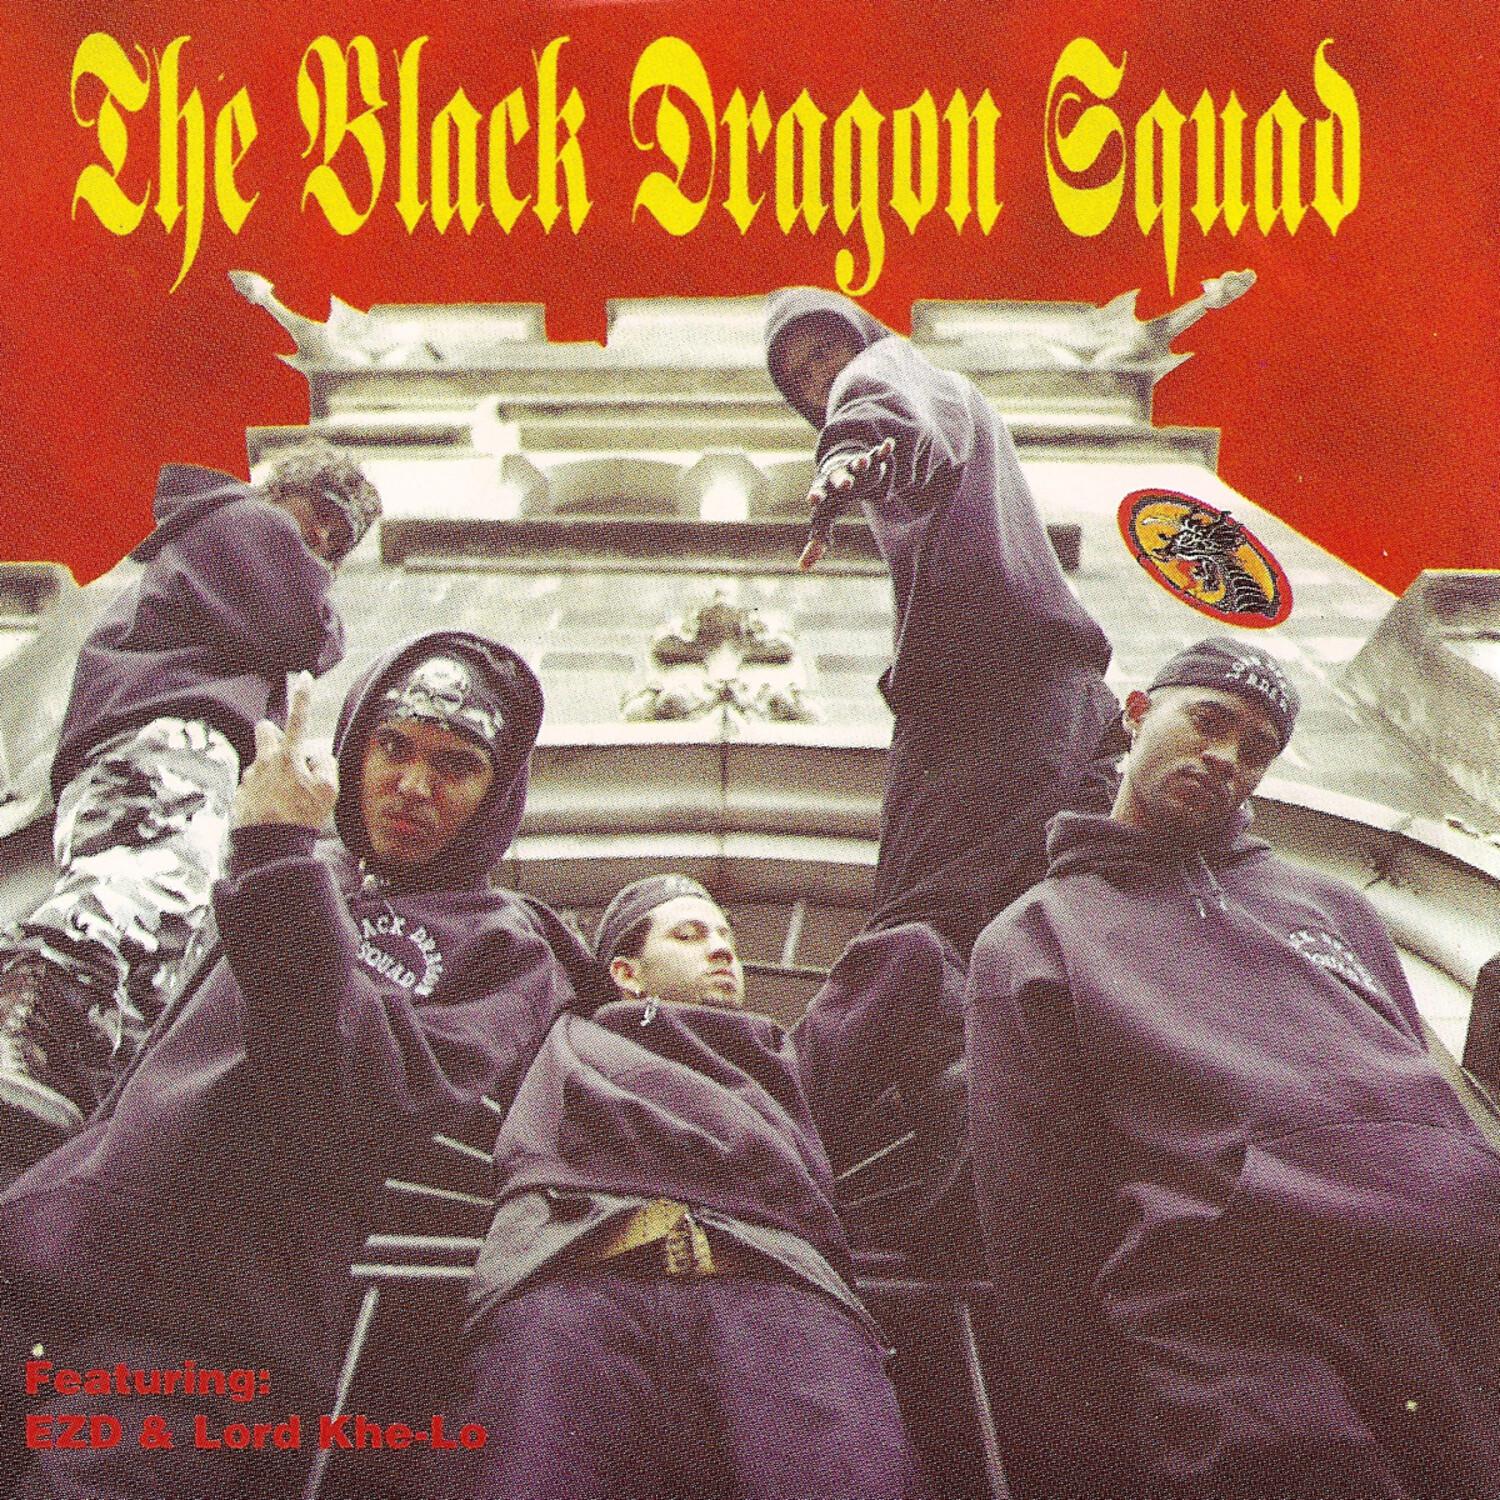 The Black Dragon Squad